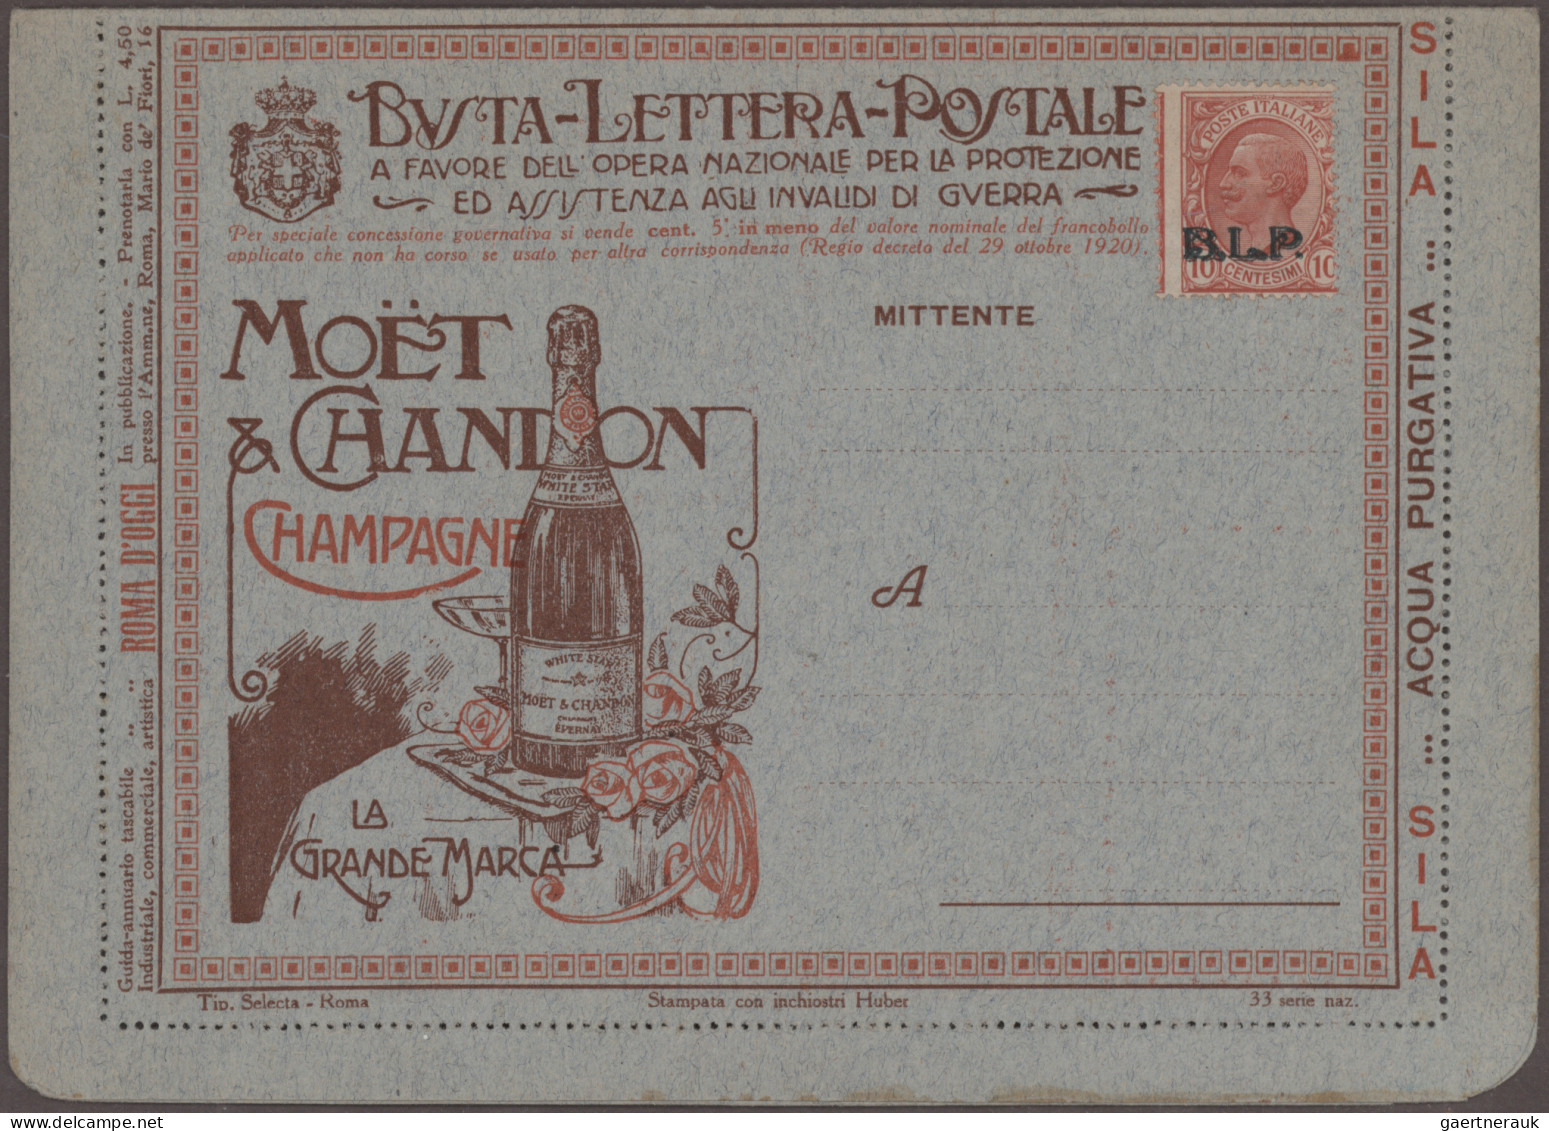 Thematics: advertising postal stationery: 1921/1923, Italy: 'Buste Letteri Posta